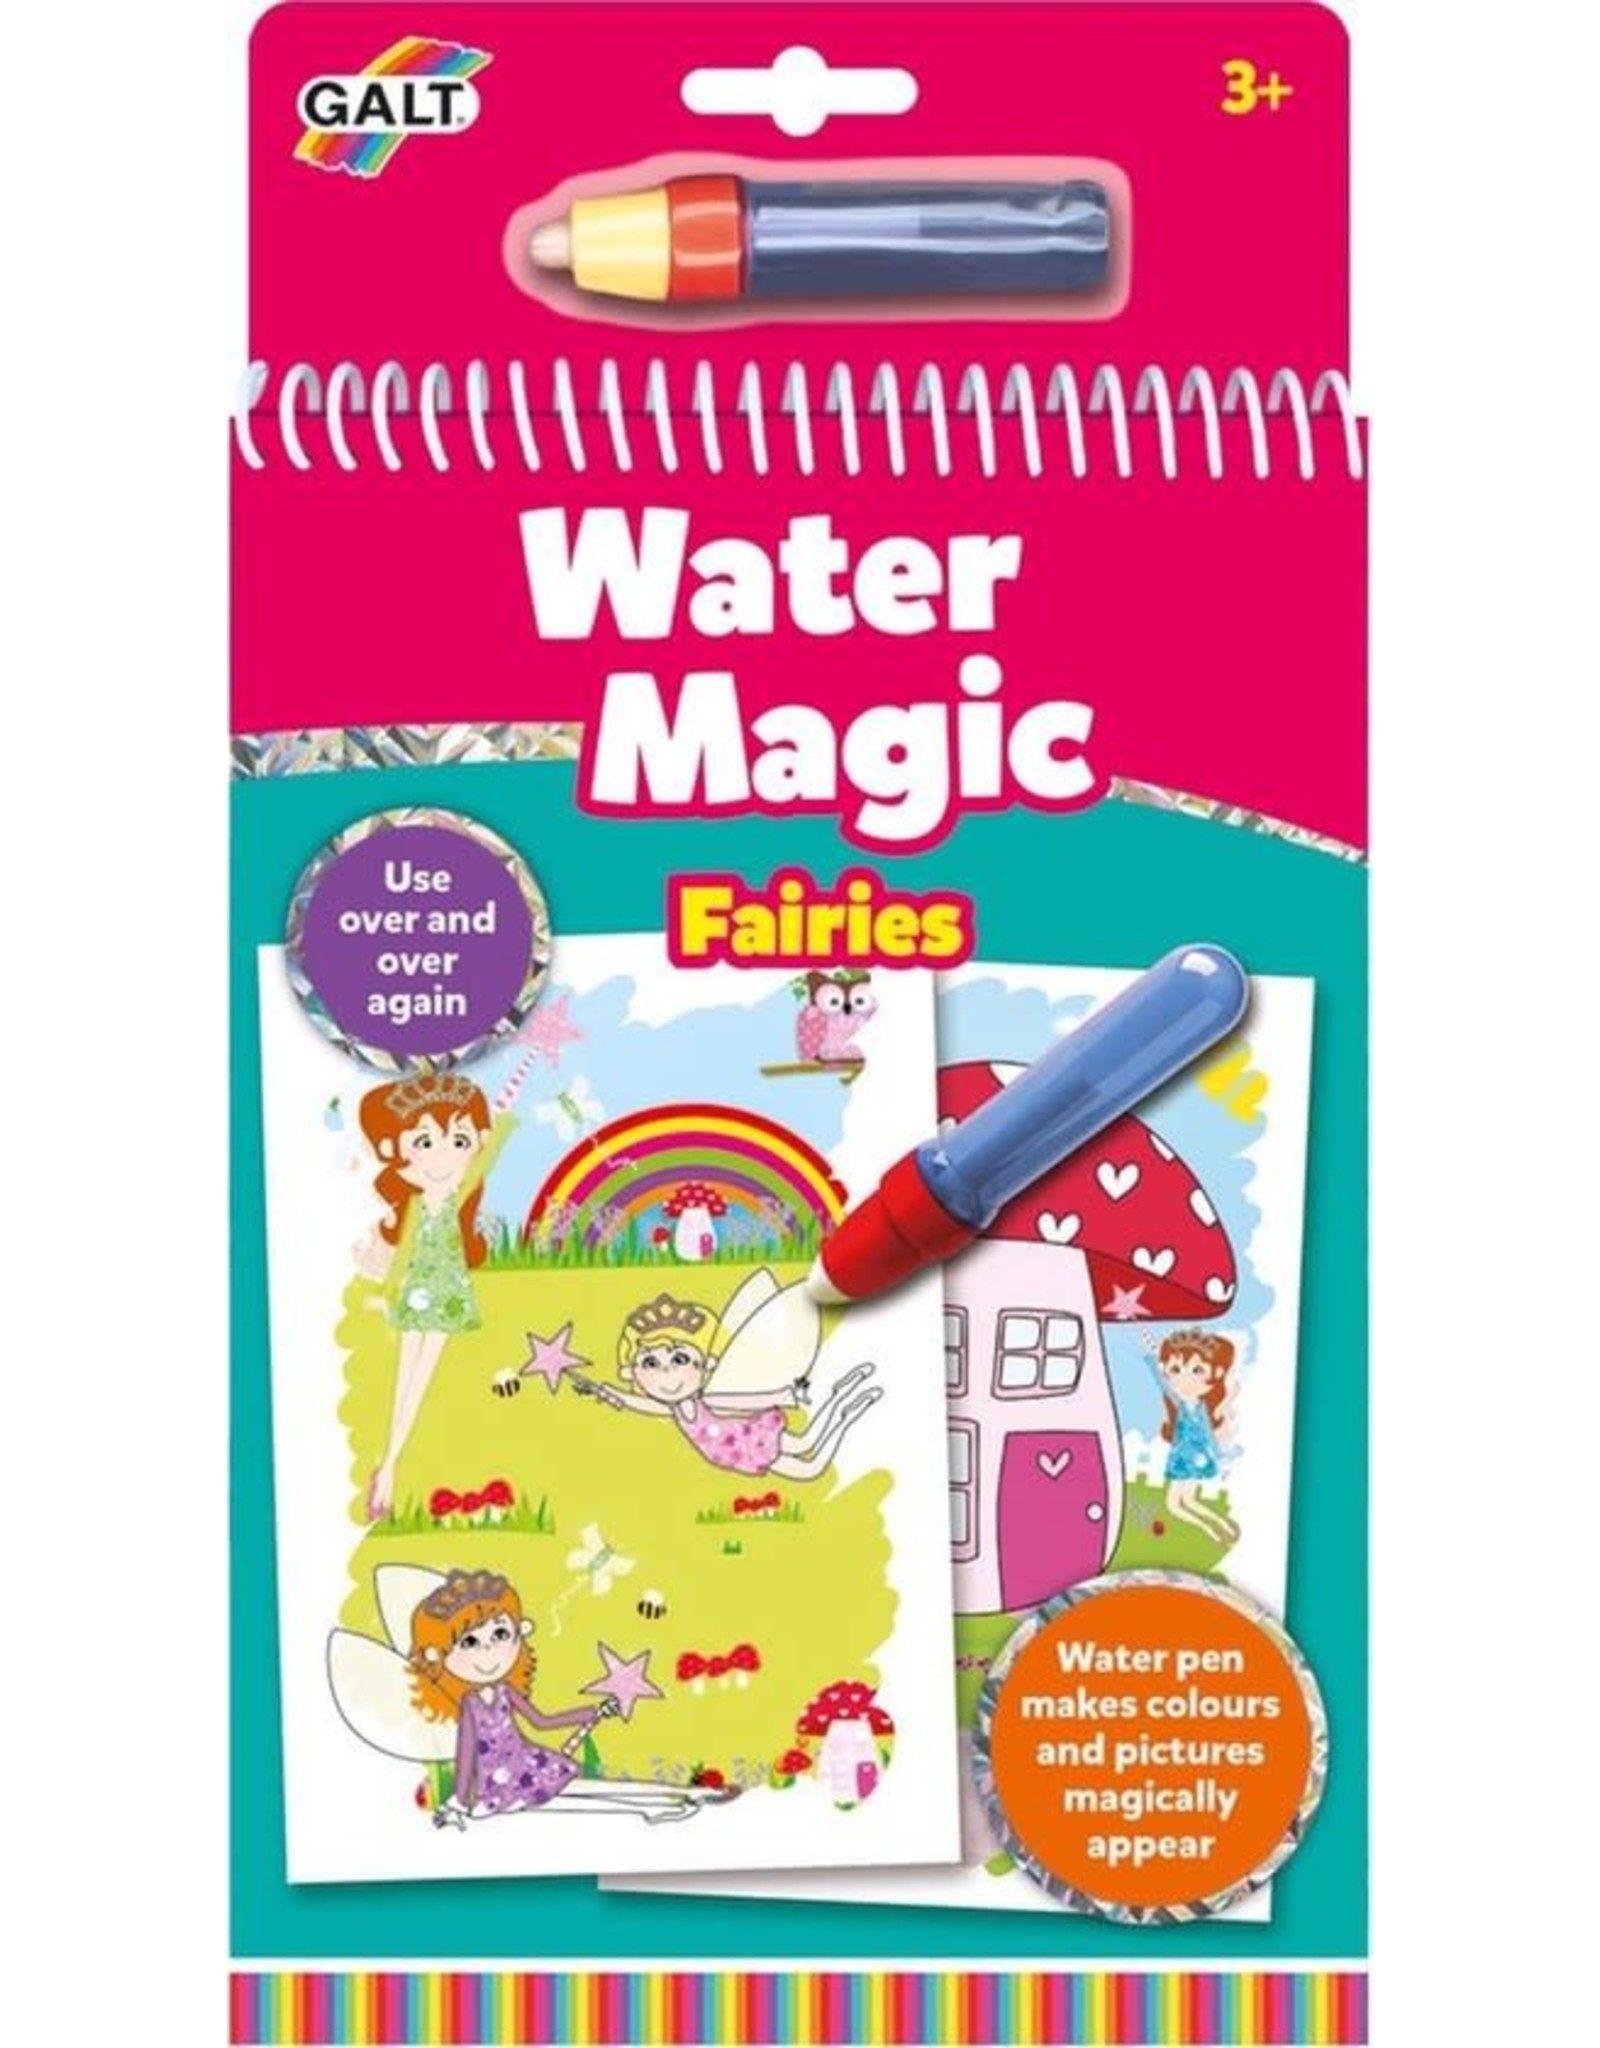 JUMBO Galt Water Magic Fairies